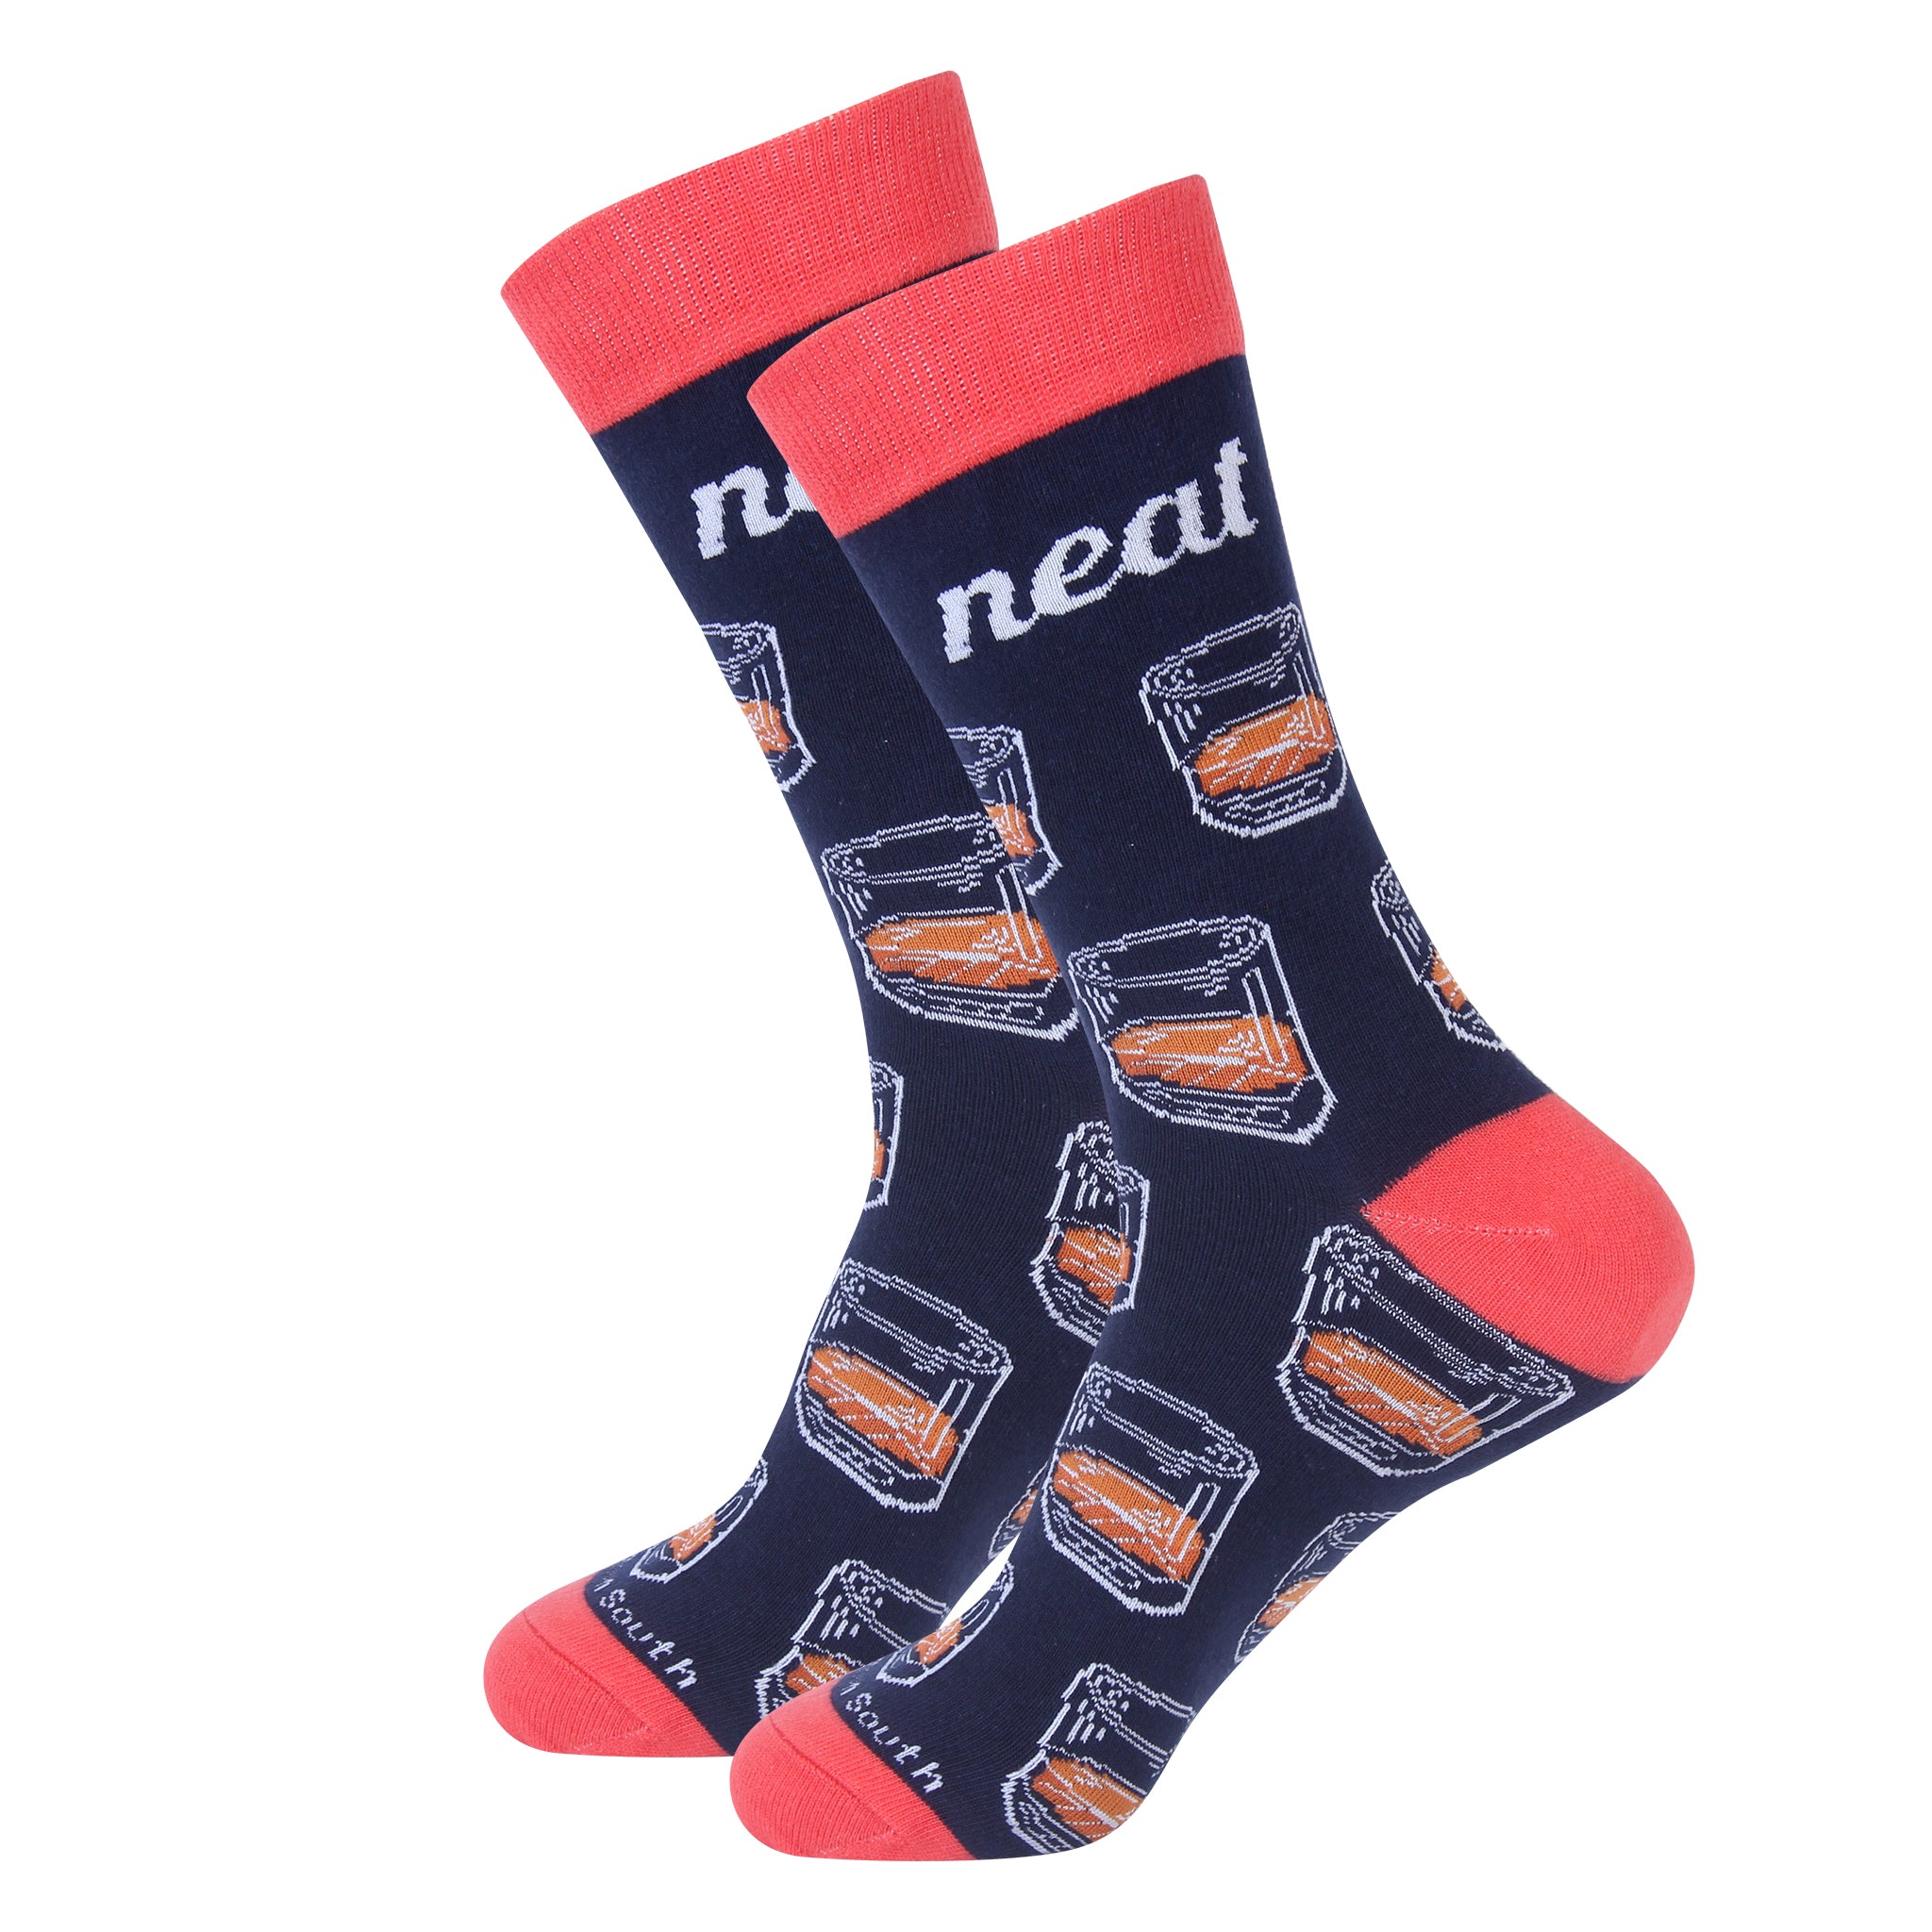 Neat Socks